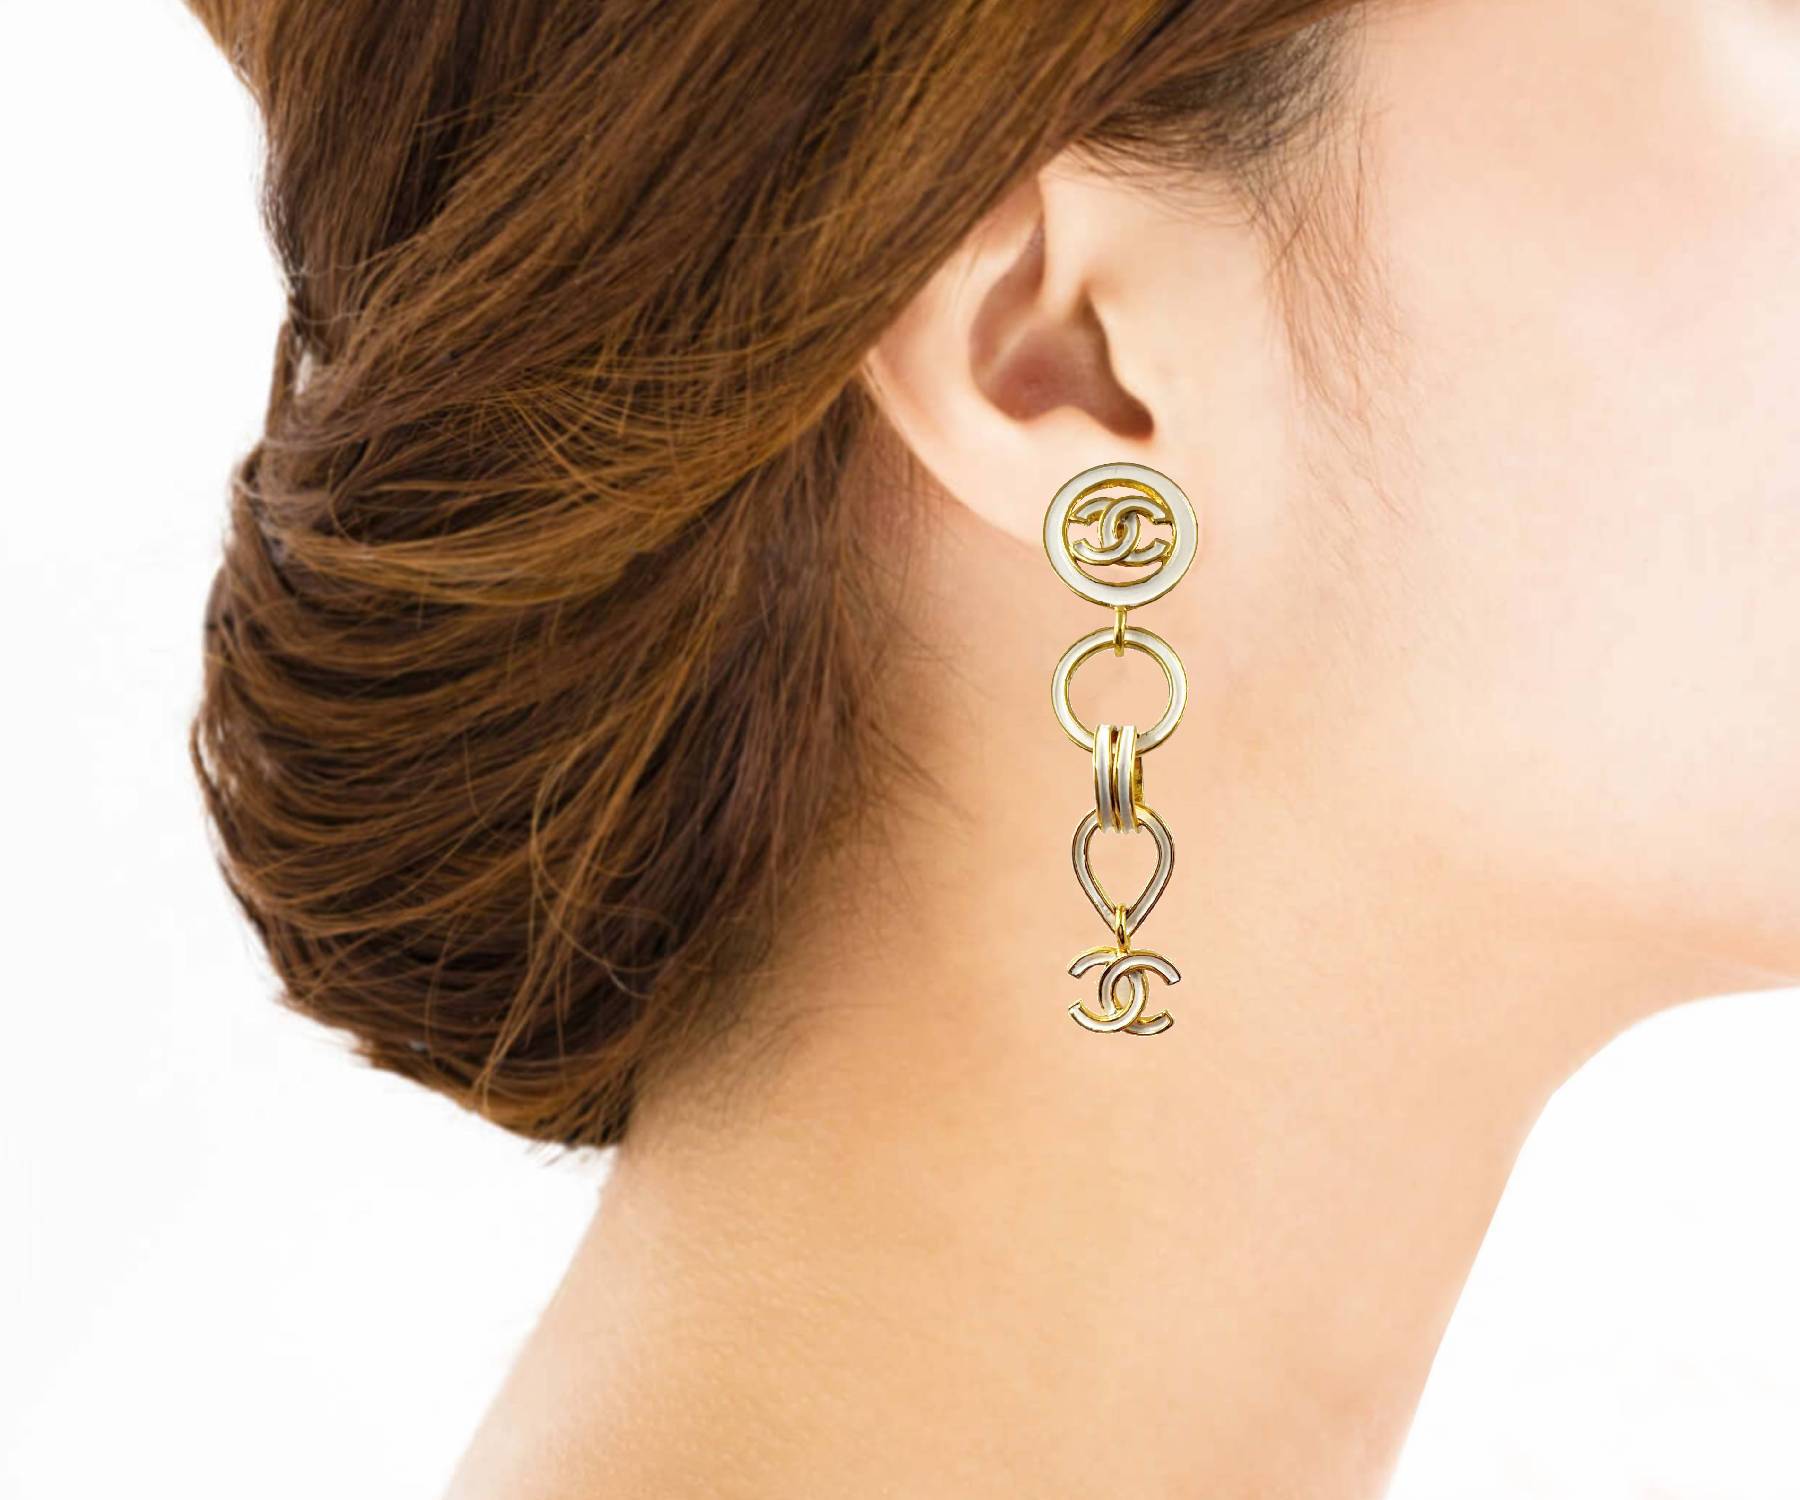 chanel vintage earrings pearl drop